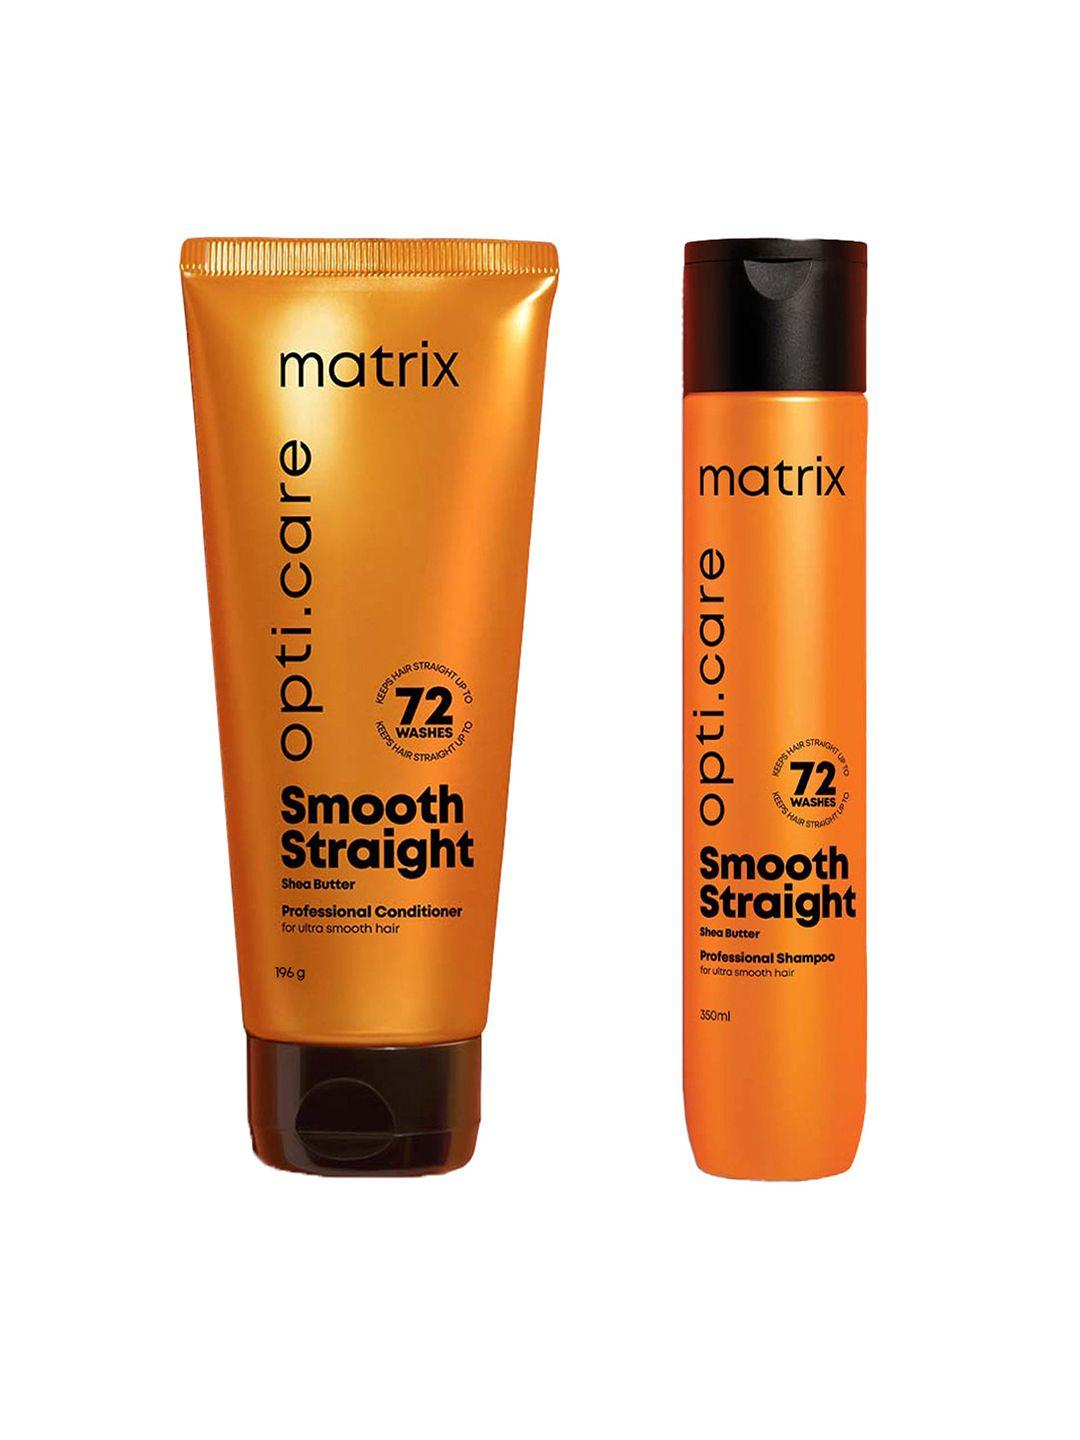 matrix opti care smooth straight professional shampoo 350ml & conditioner 196g